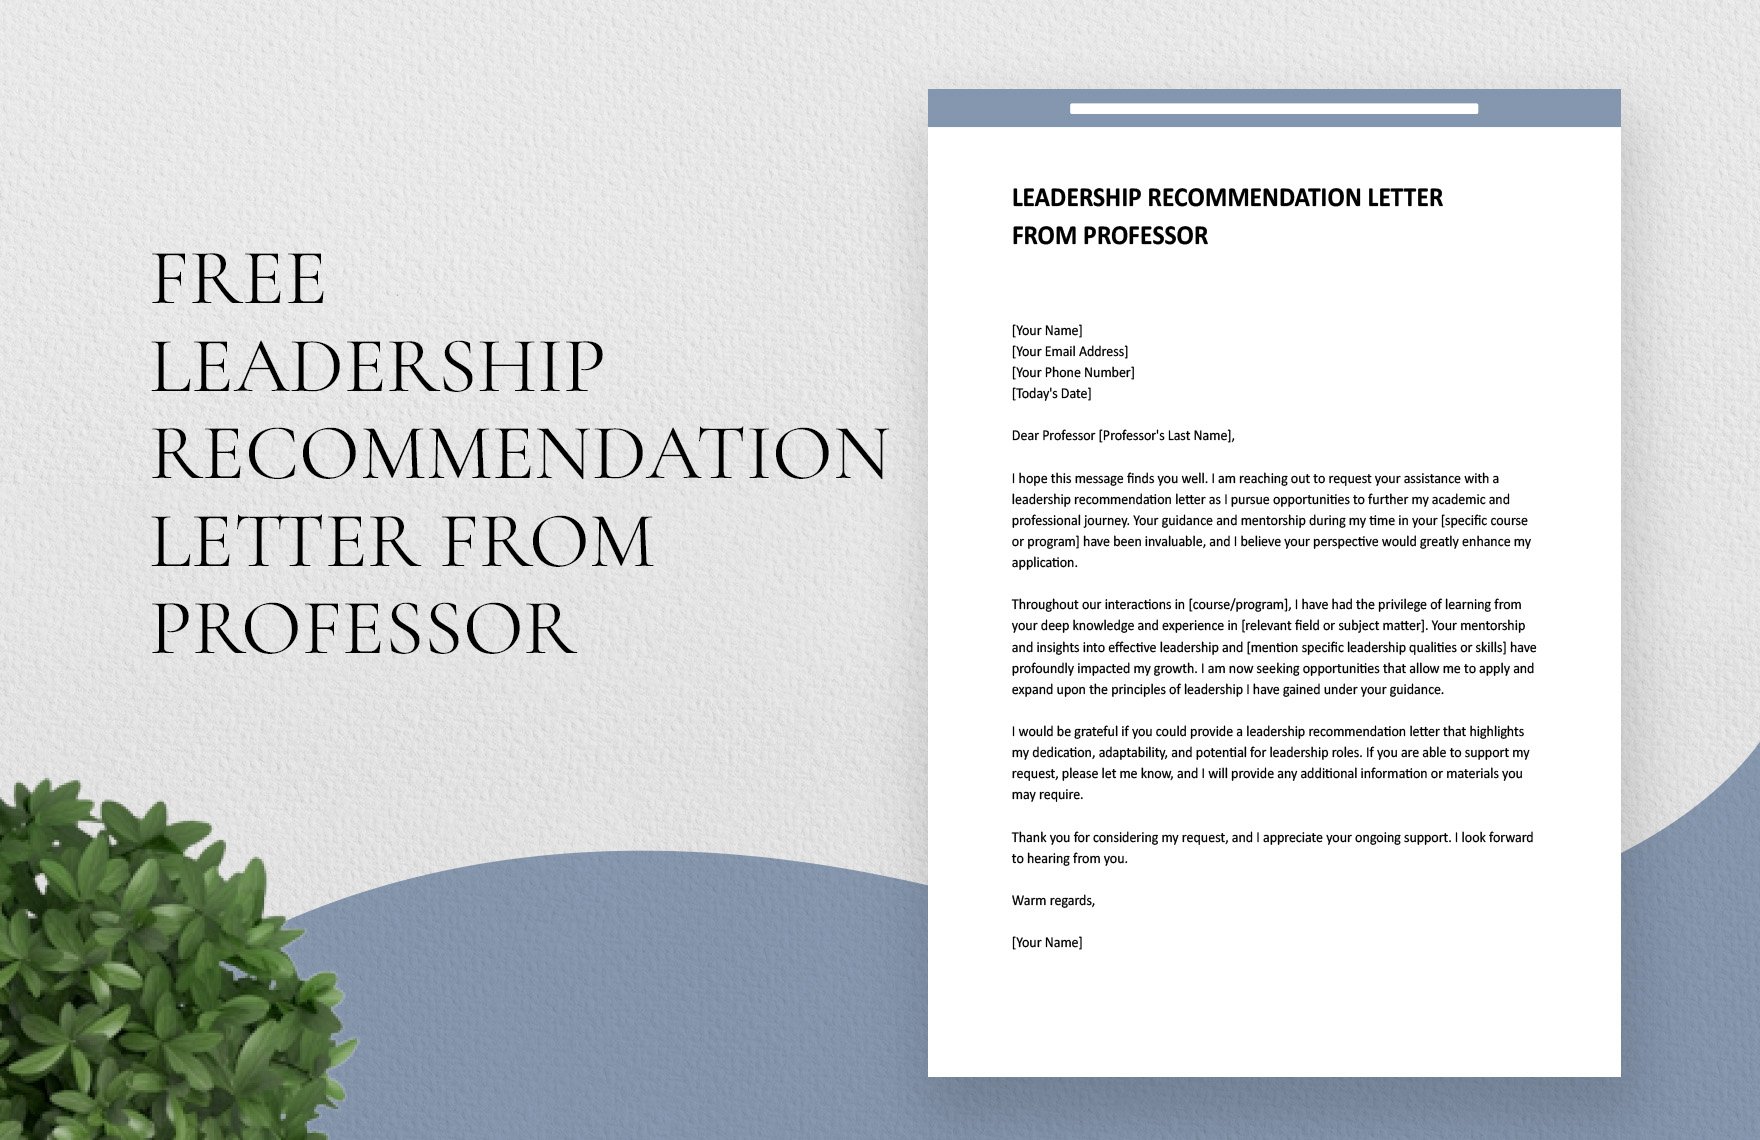 Leadership Recommendation Letter From Professor